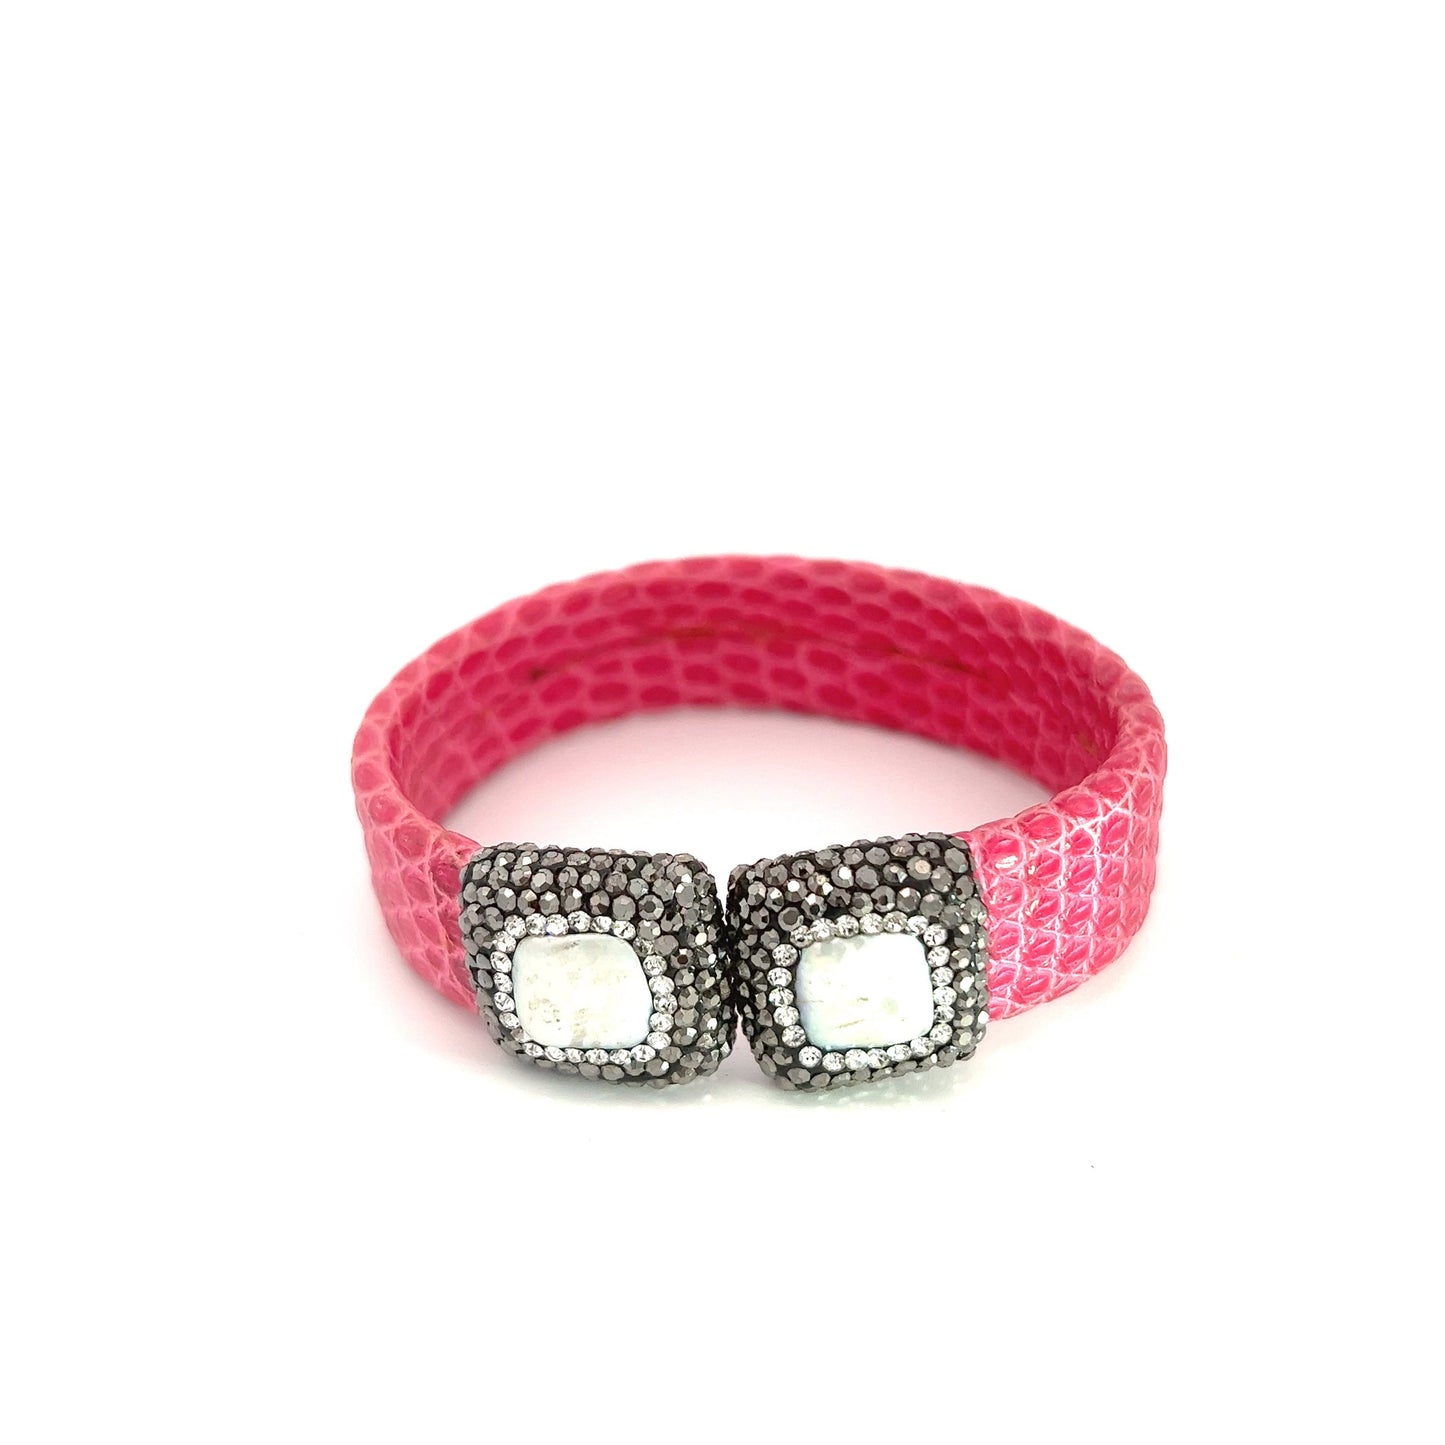 Pink Small Splendor Gemstone Leather Cuff Bracelet - Born To Glam